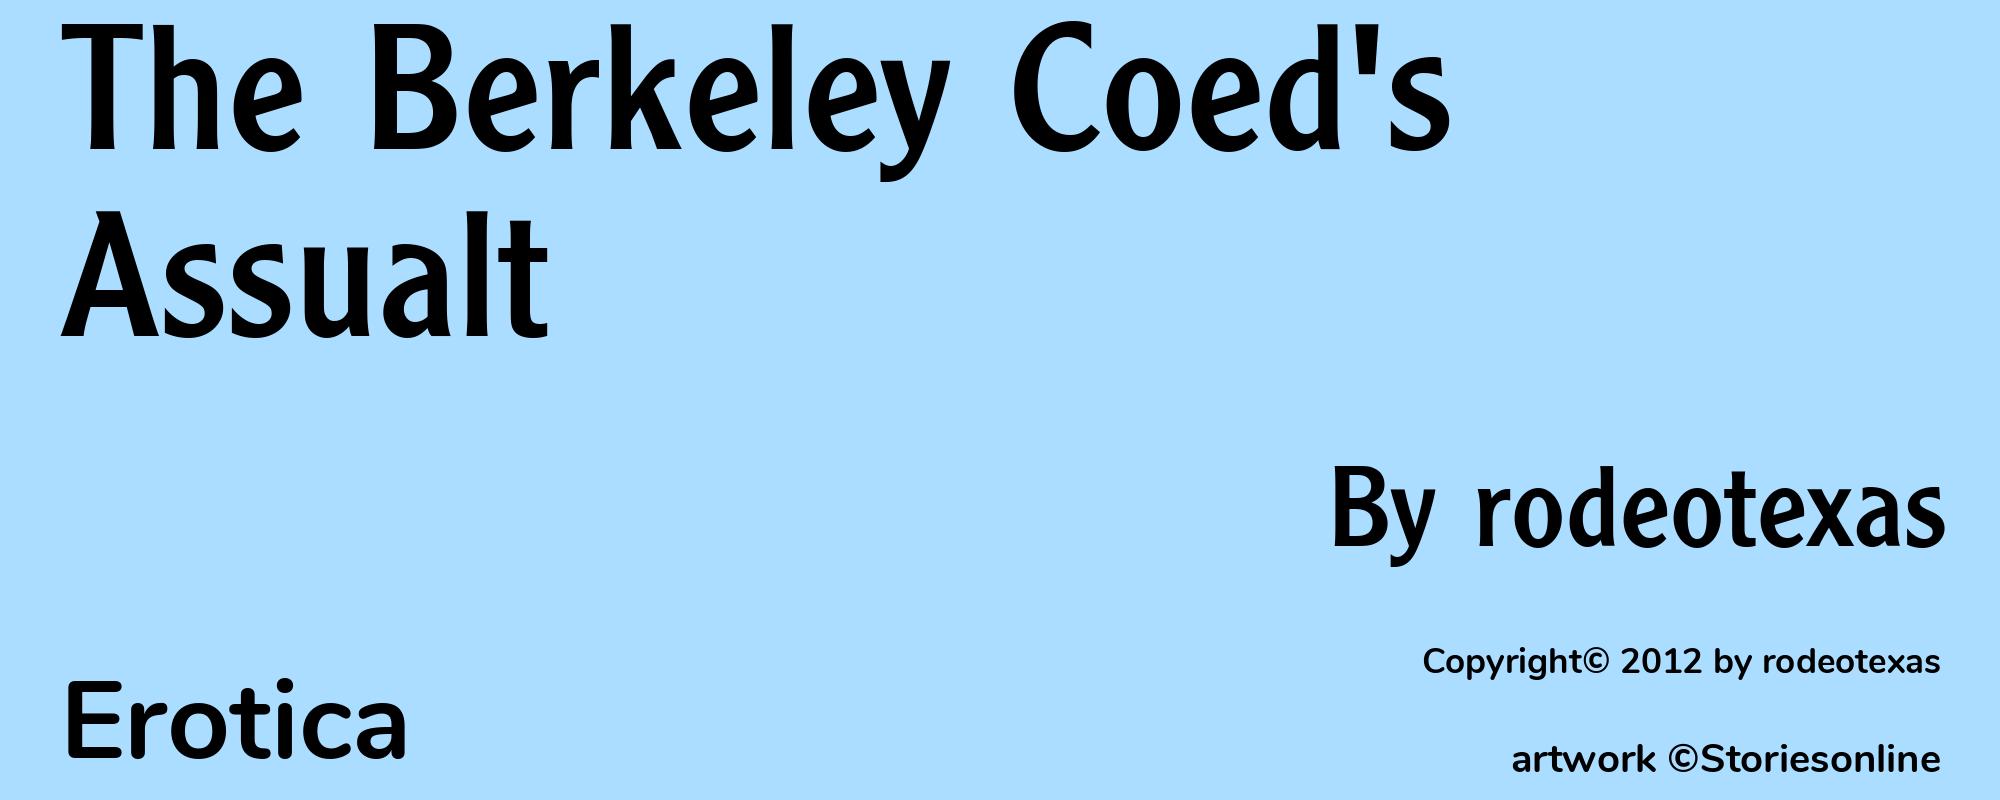 The Berkeley Coed's Assualt - Cover